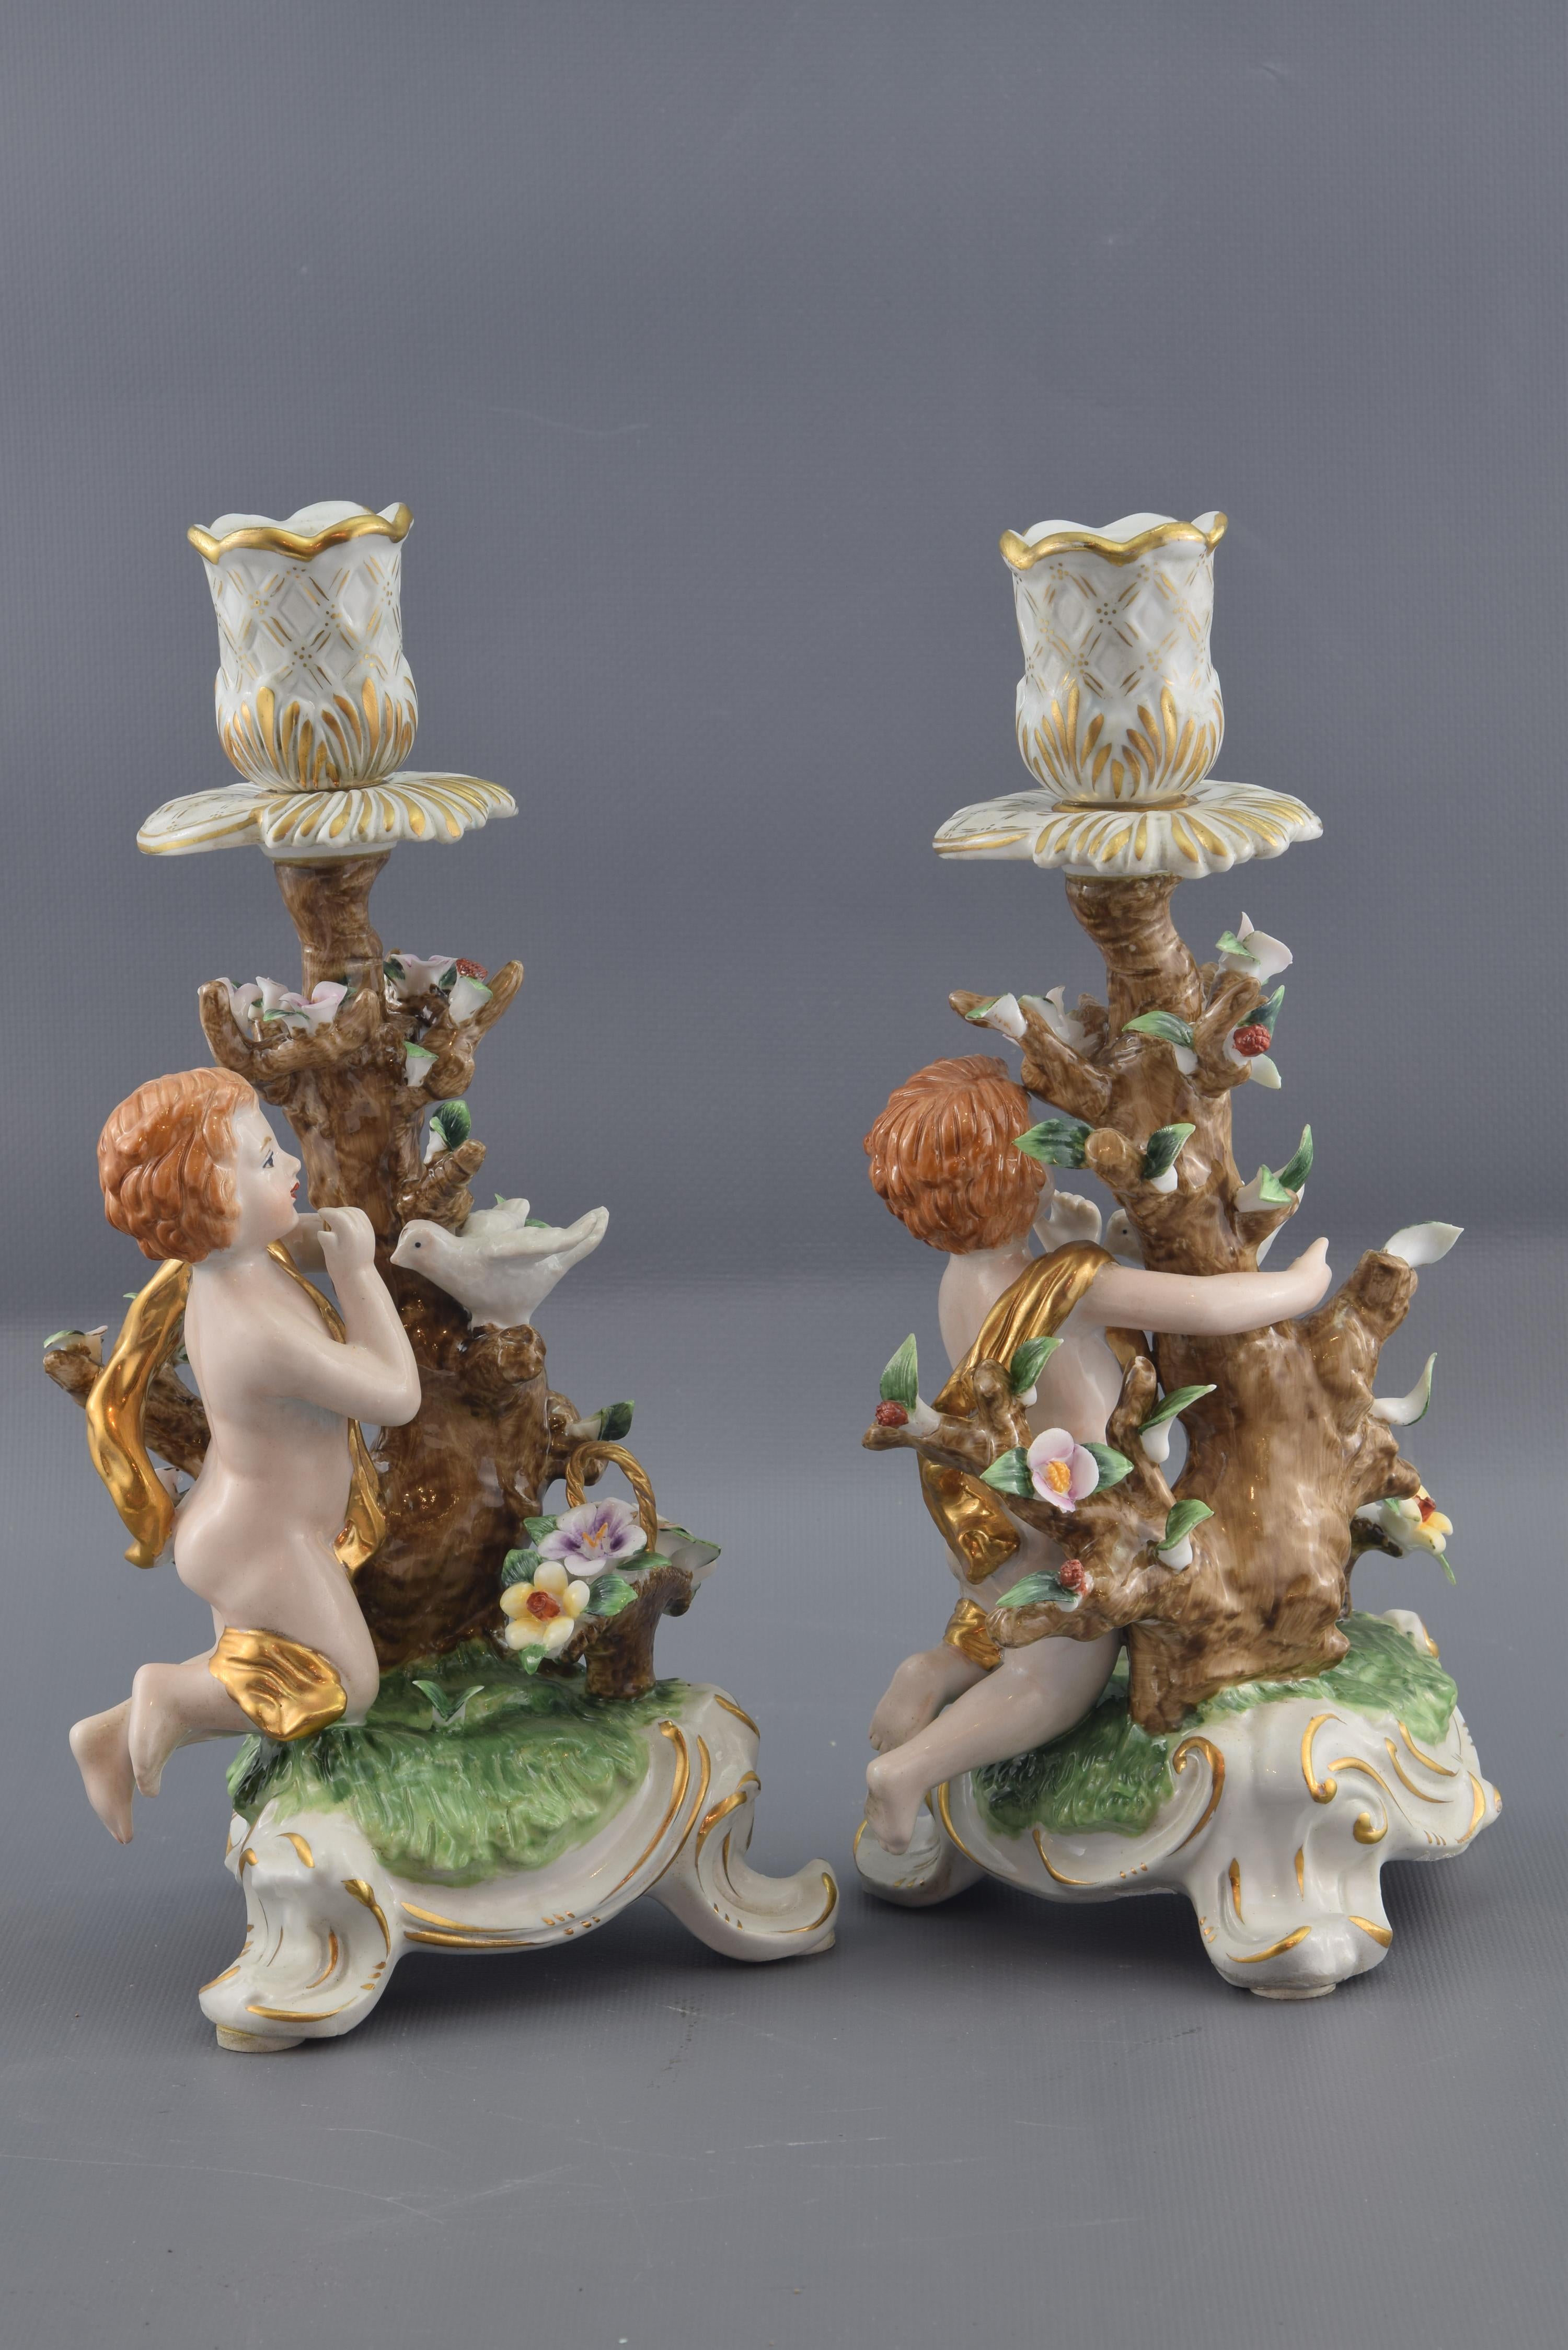 European Pair of Porcelain Candleholders, after Models from Sèvres, France